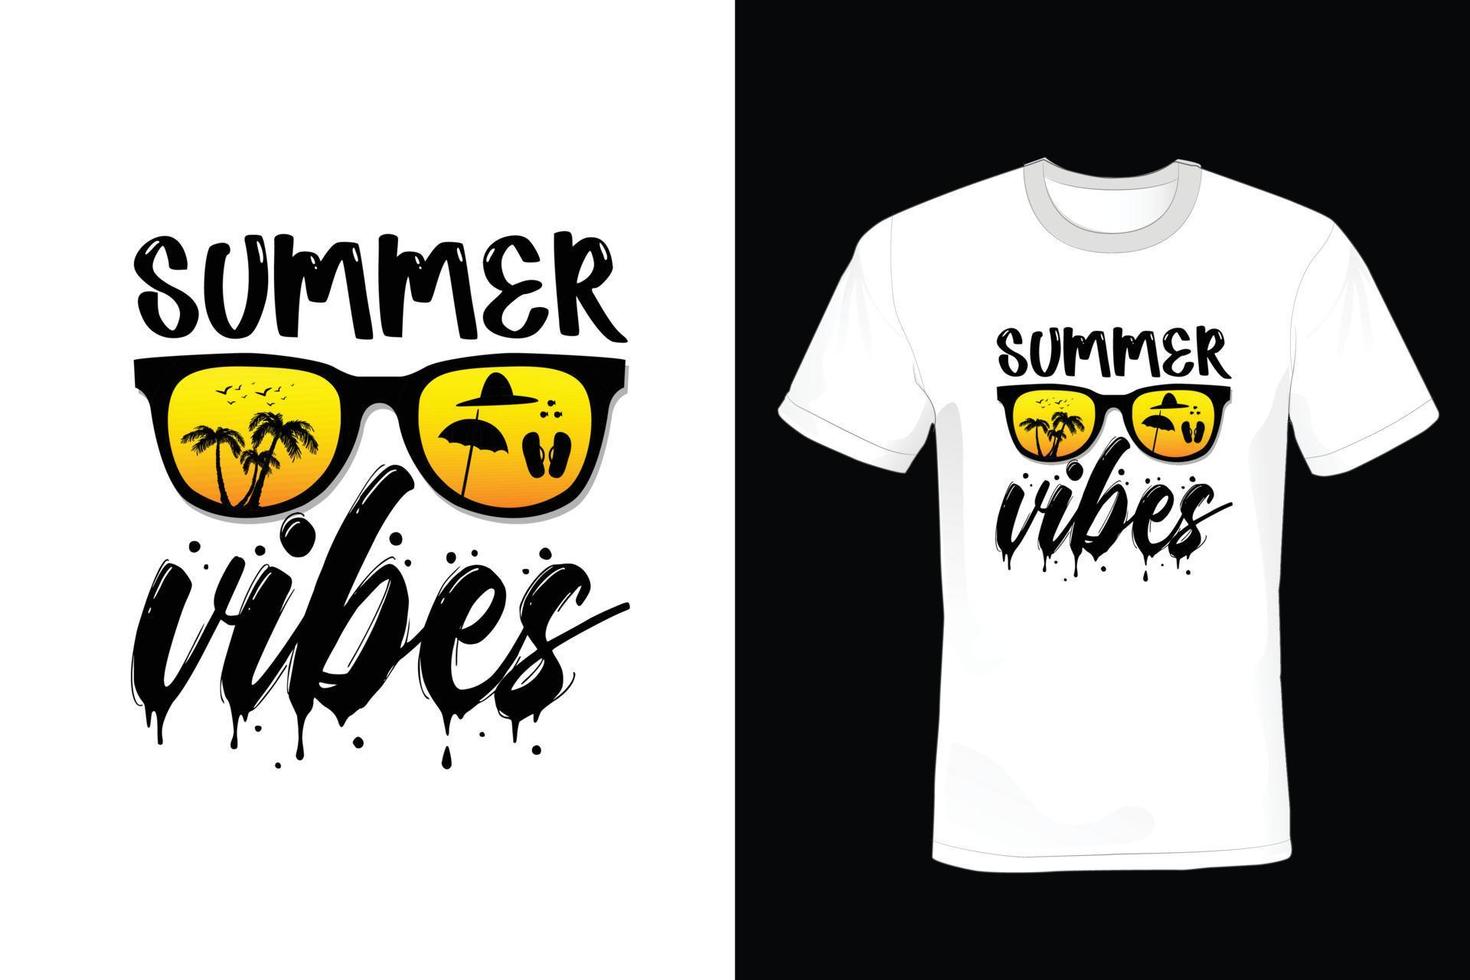 Summer T-shirt design, typography, vintage vector